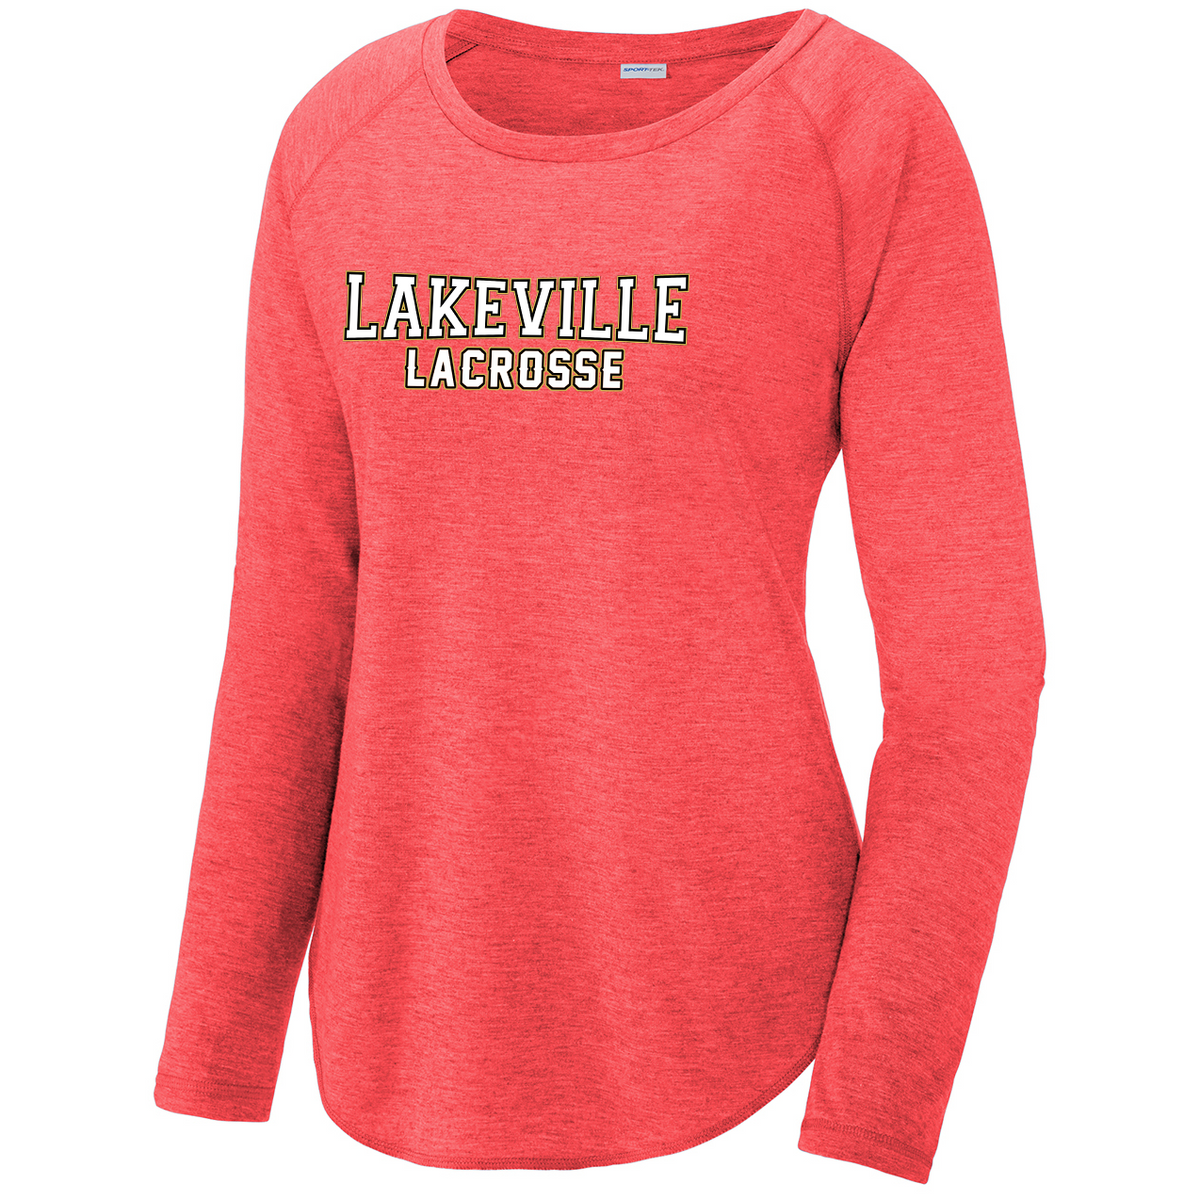 Lakeville Lacrosse Women's Raglan Long Sleeve CottonTouch